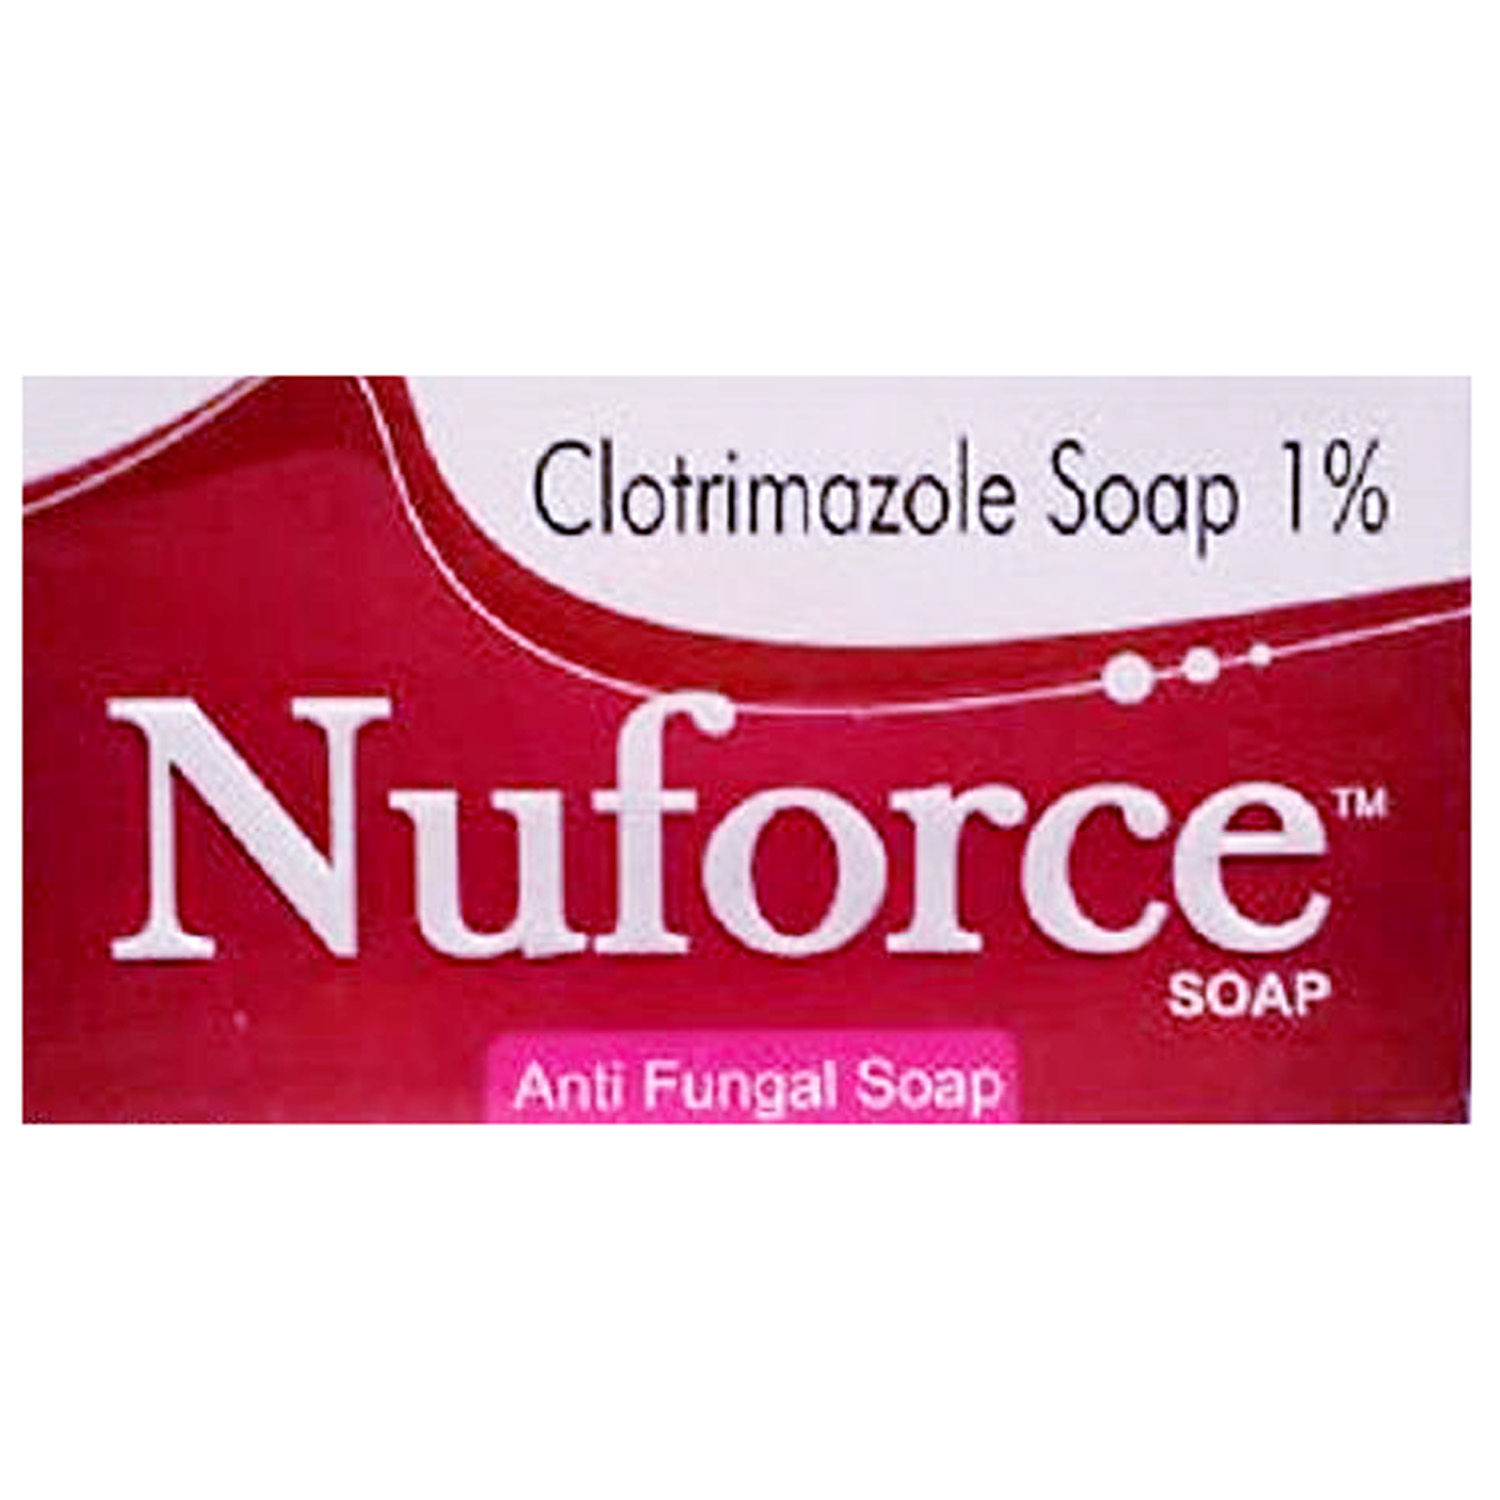 Buy Nuforce Soap, 75 gm Online